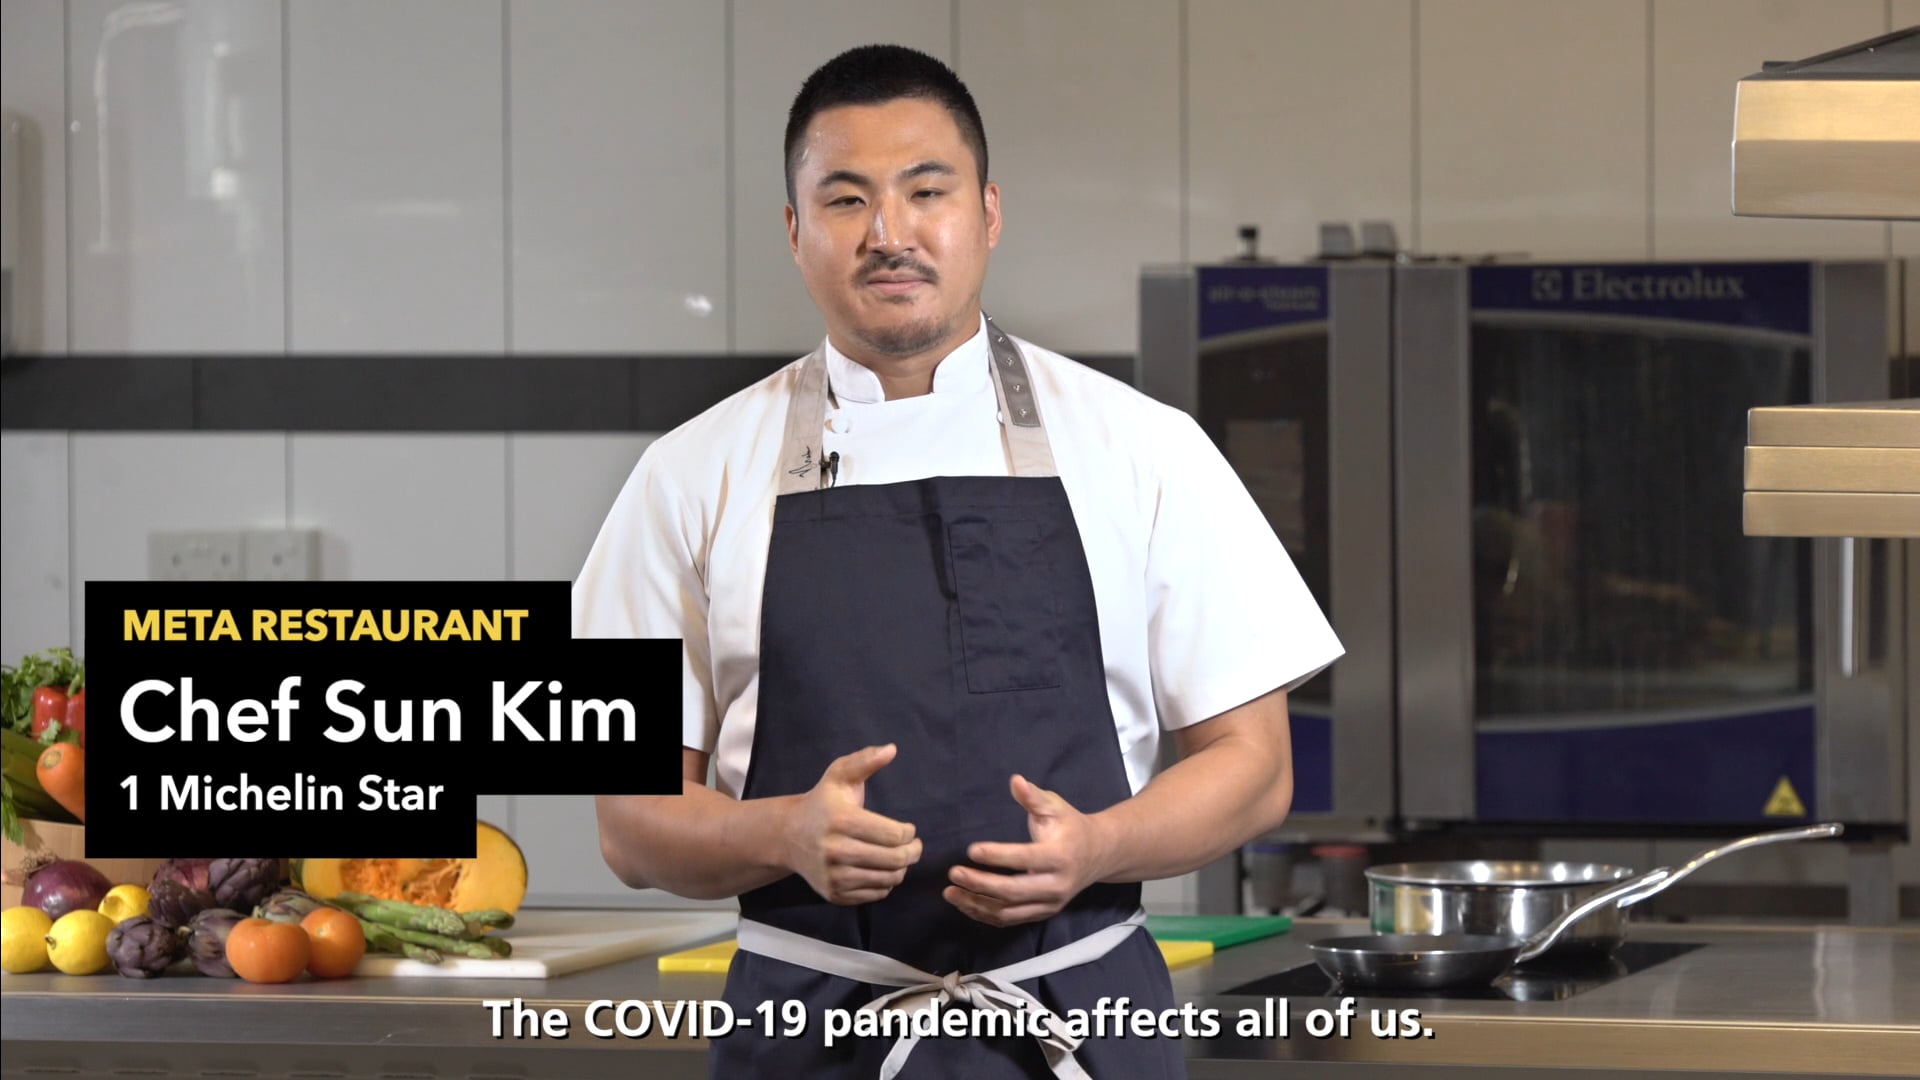 Chef Sun Kim